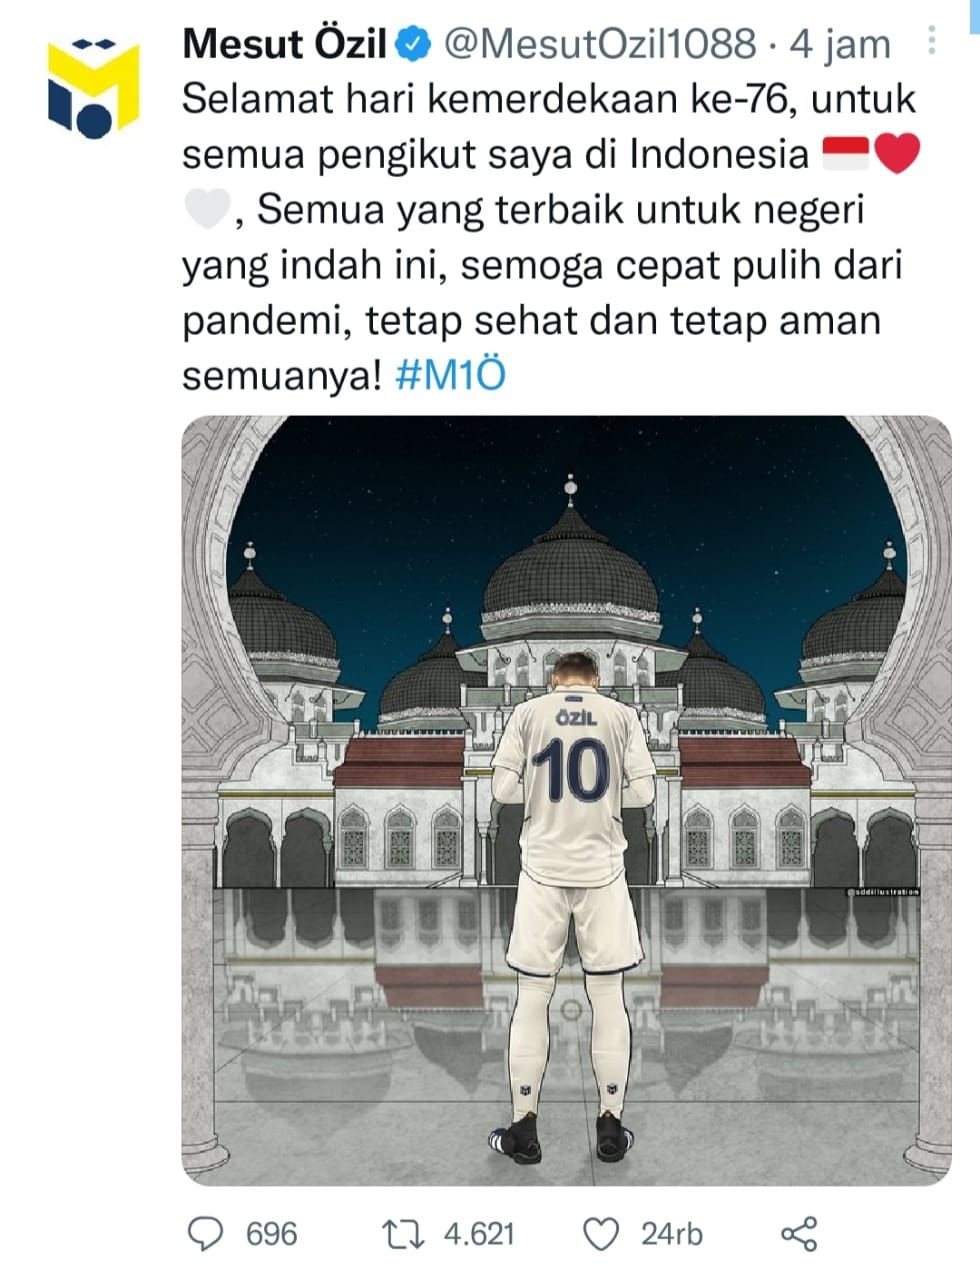 Mesut Ozil mengucapkan selamat hari kemerdekaan ke-76 untuk pengikutnya di Indonesia. Sontak, netizen meresponsnya.